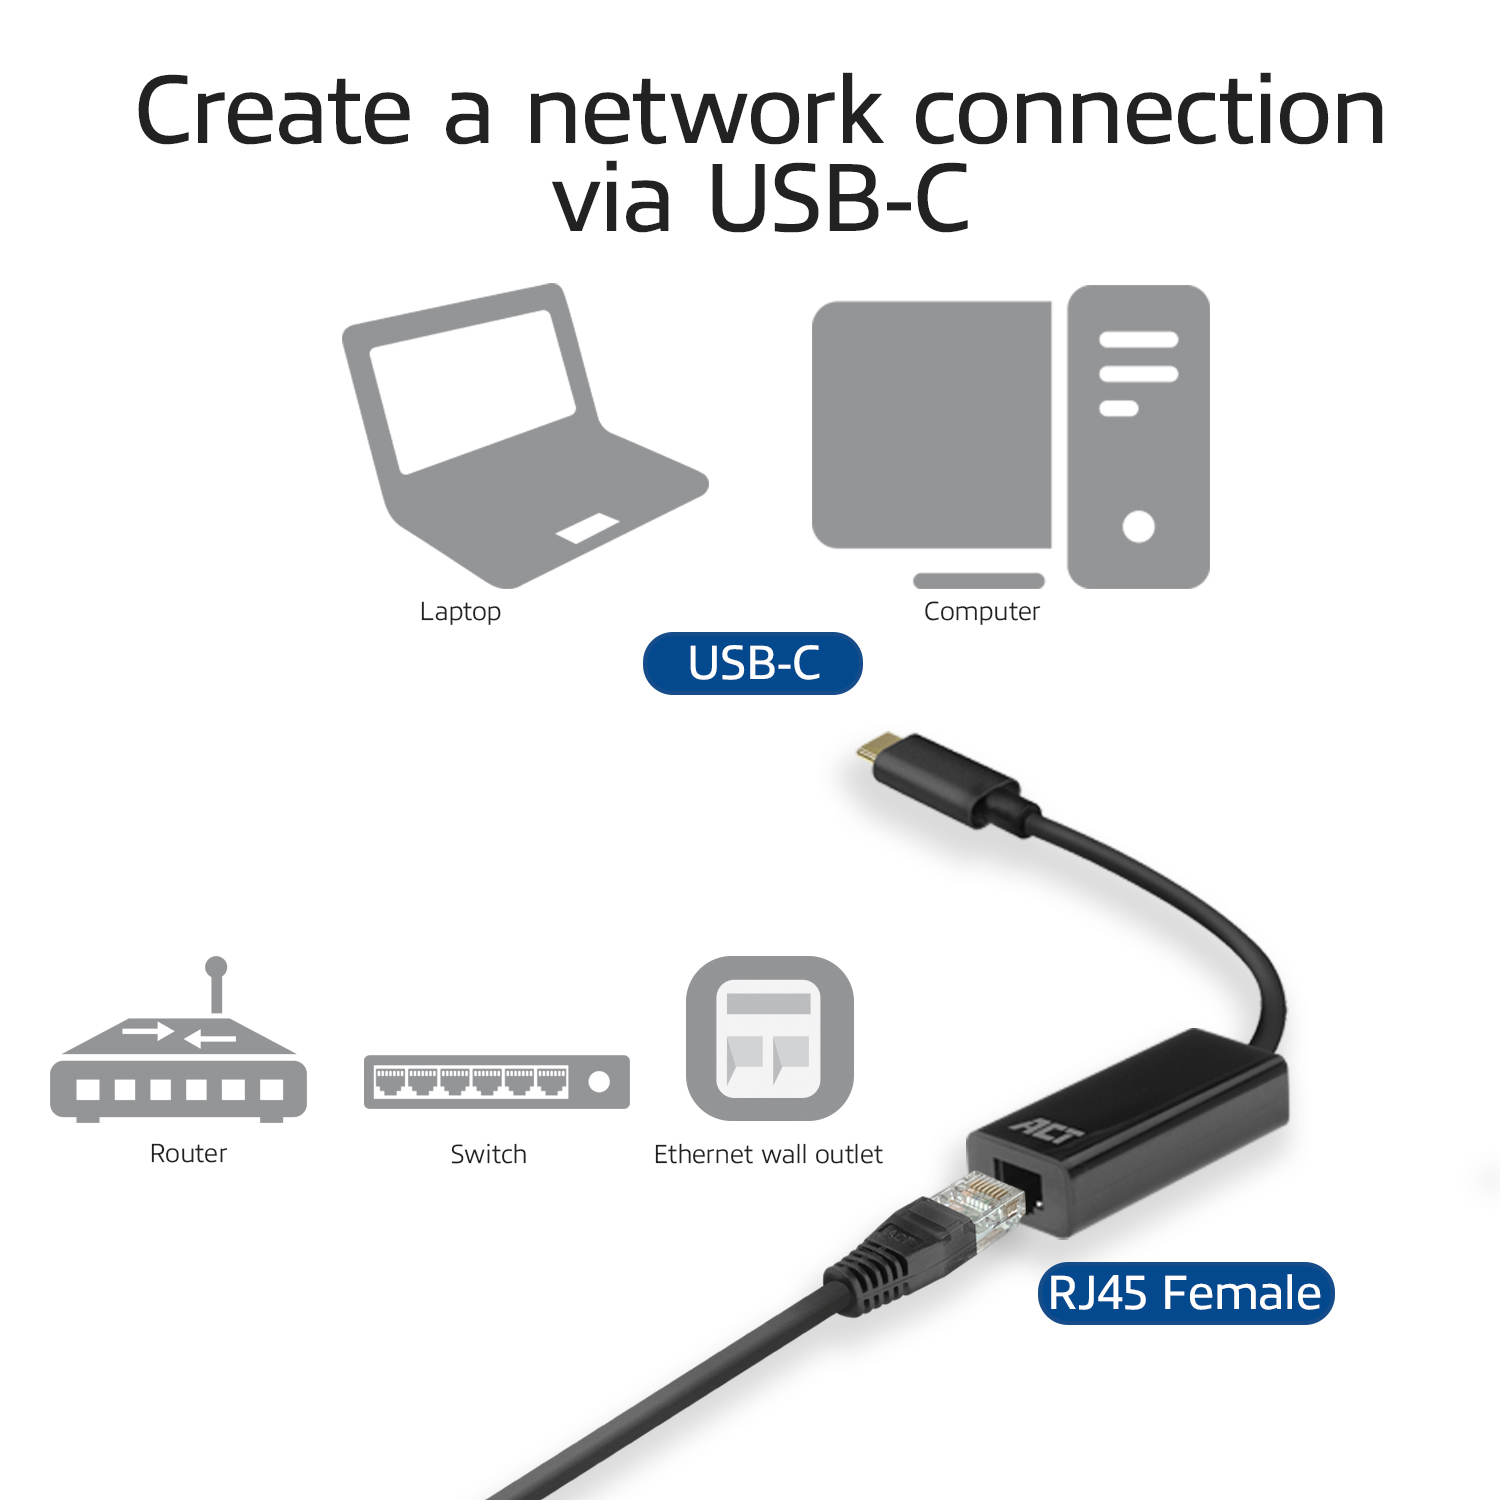 ACT AC7335 | USB-C